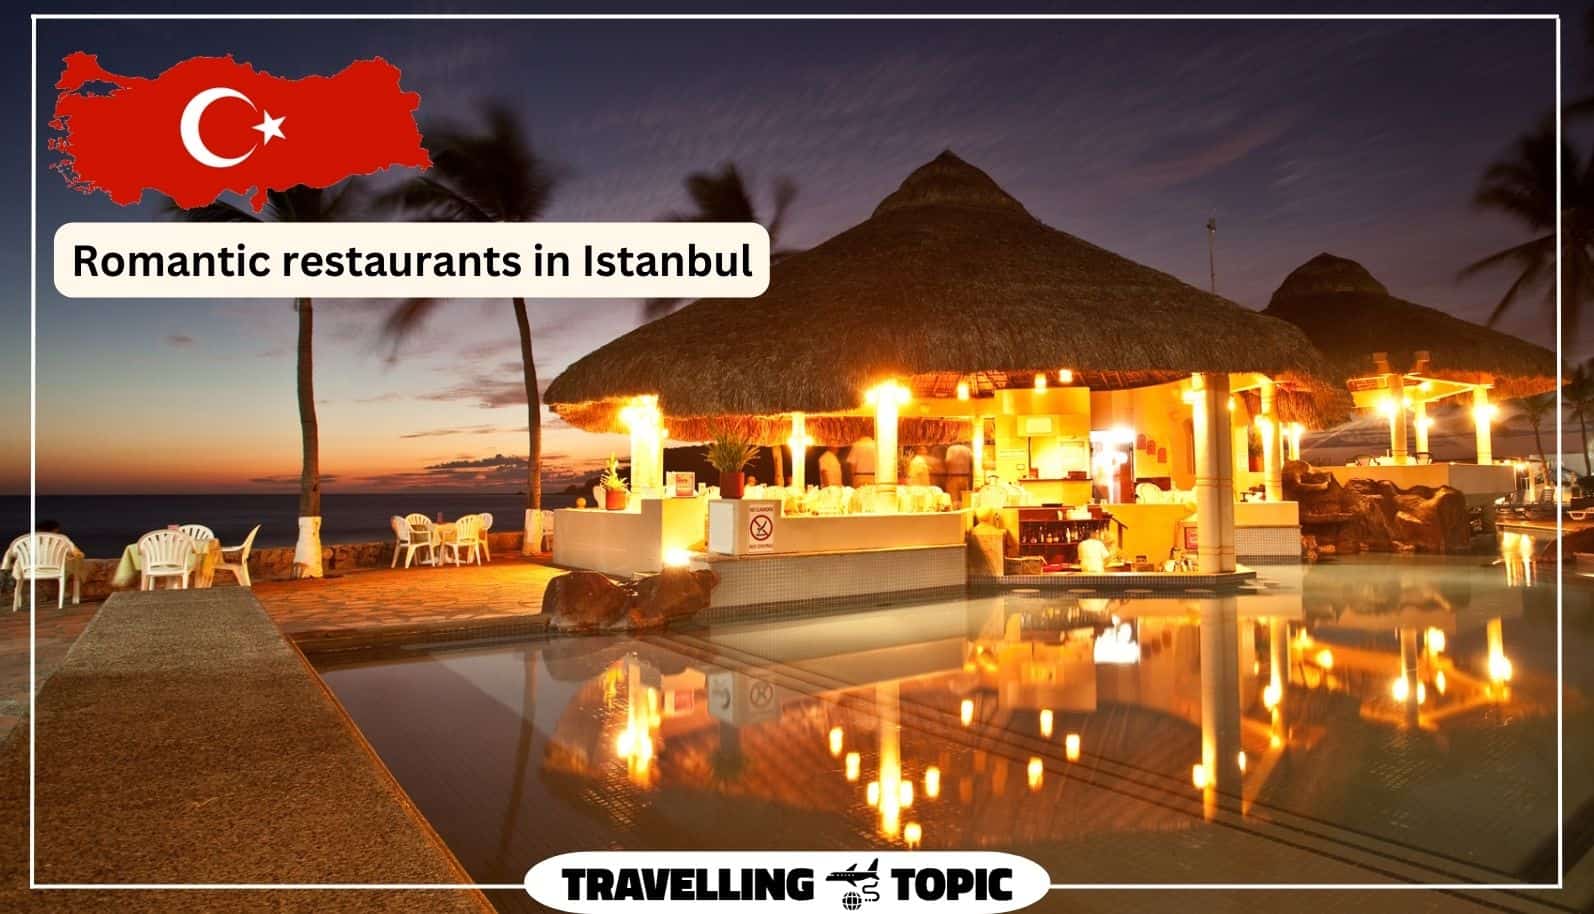 Romantic restaurants in Istanbul